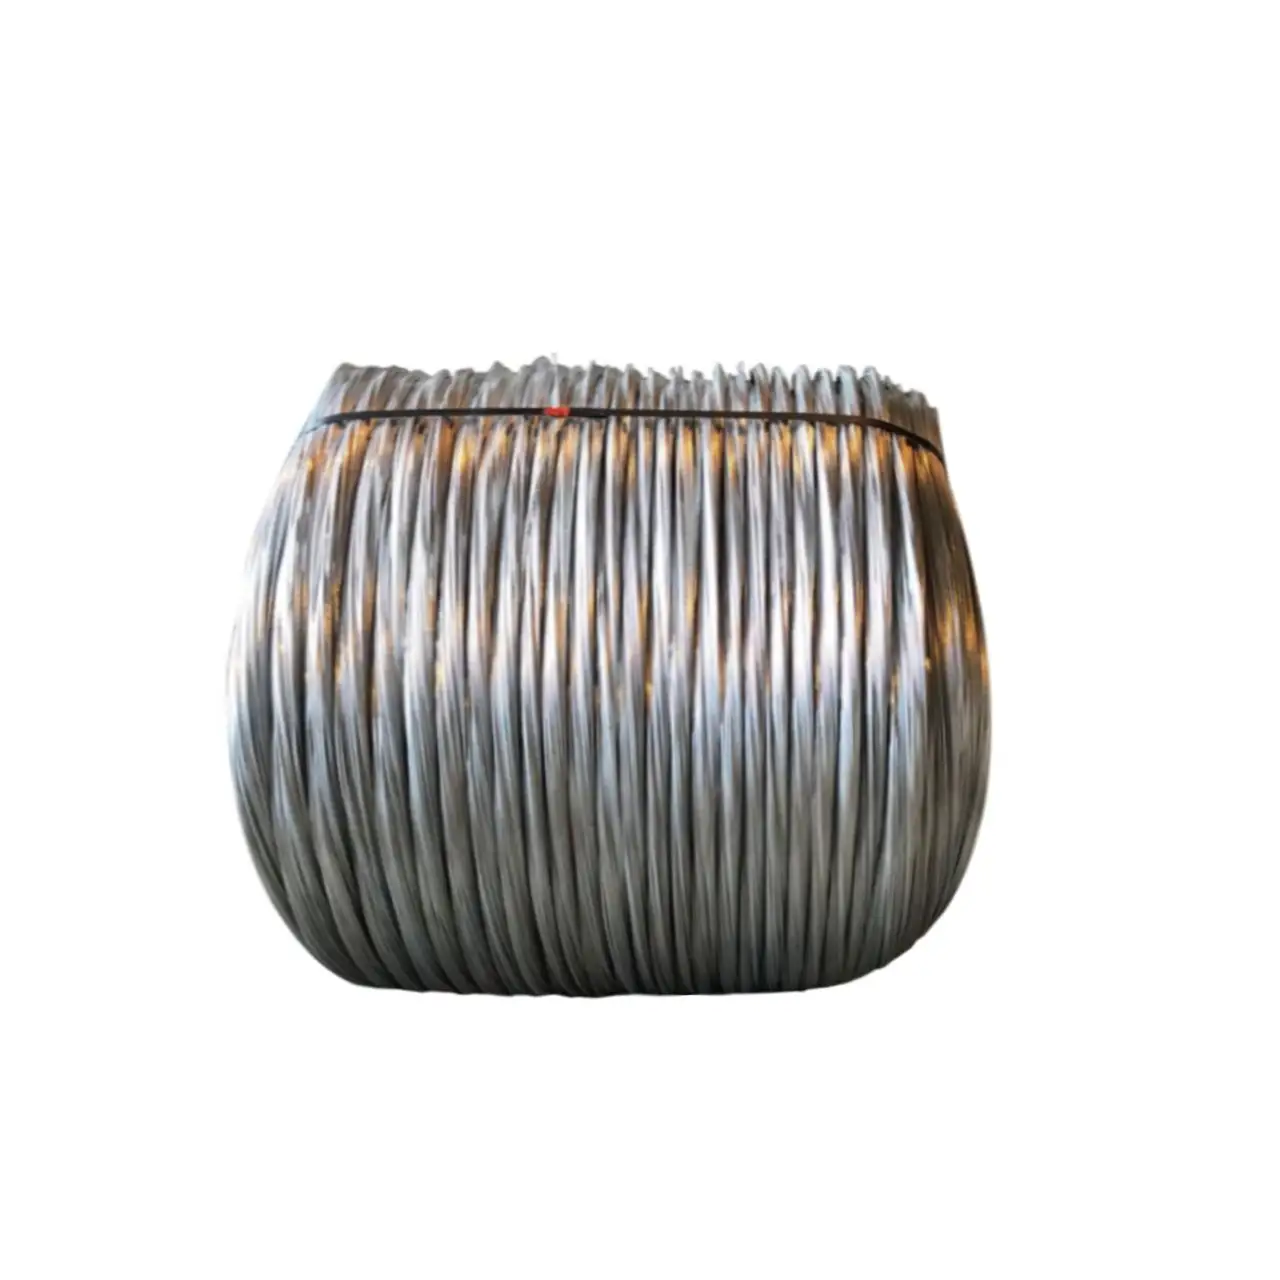 Top quality Italian zinc-alu steel wire for netting